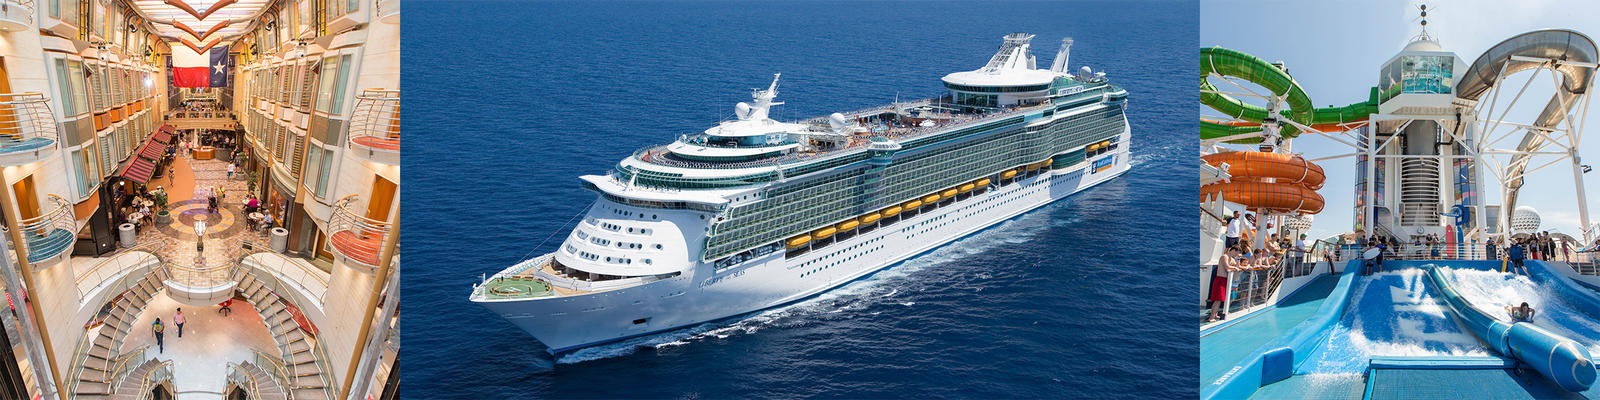 luxury ocean cruise